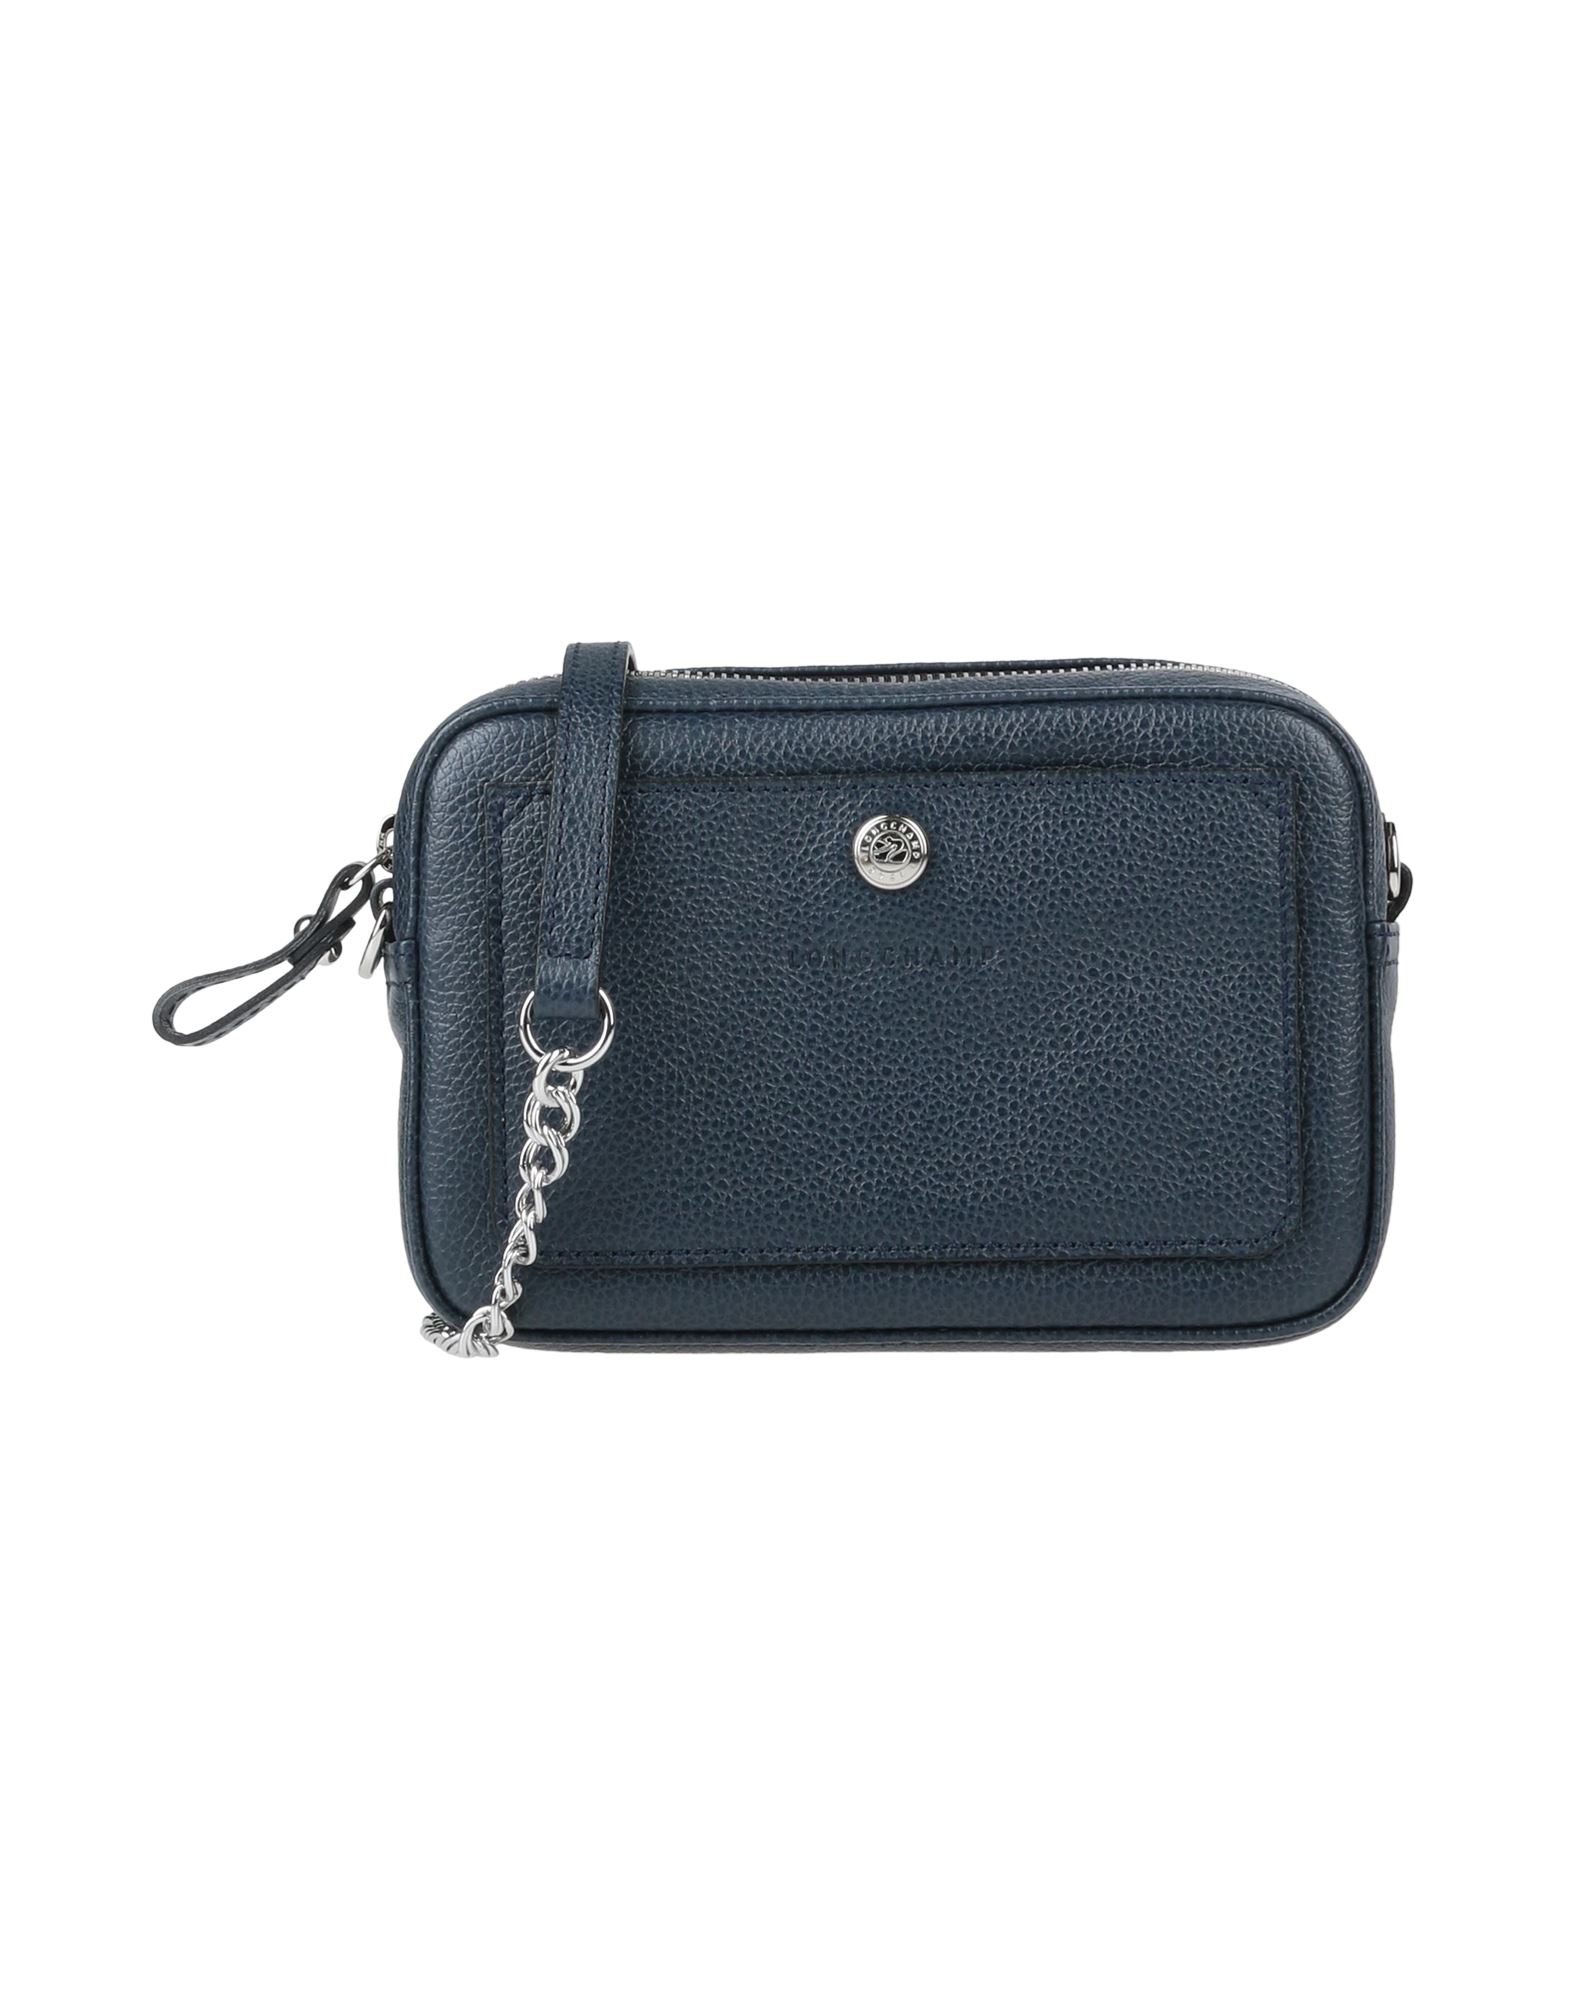 Longchamp Handbags In Navy Blue